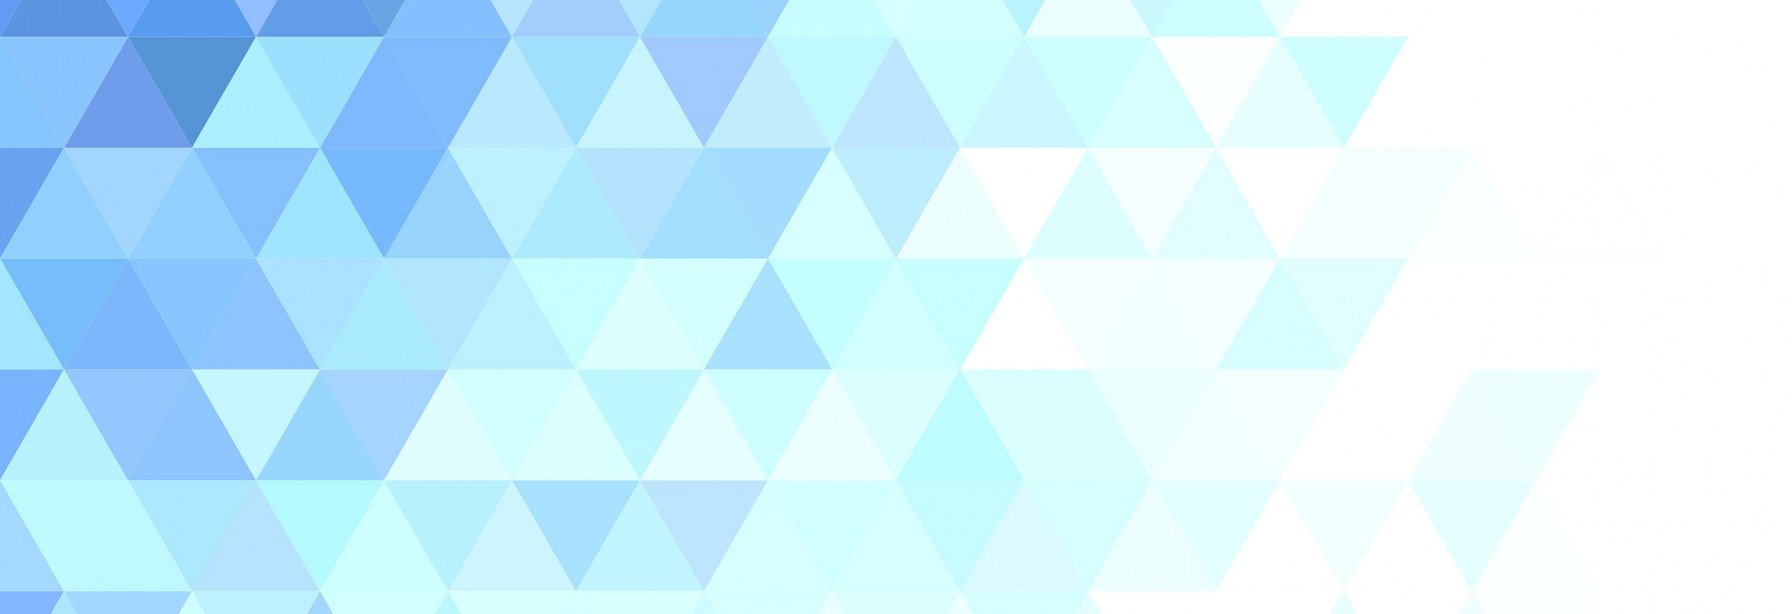 Geometric blue background